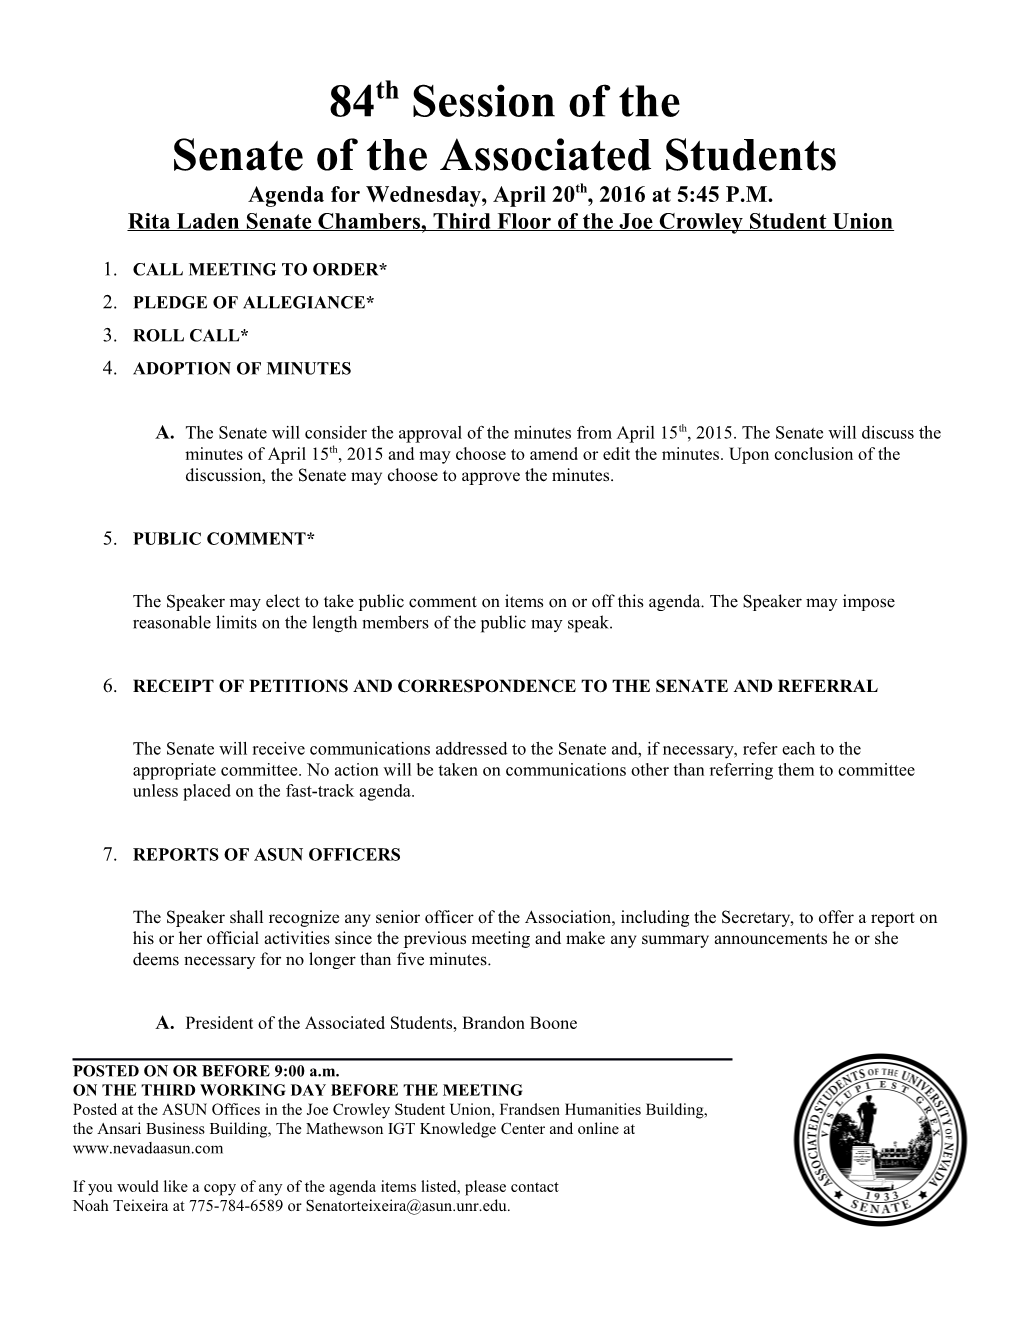 Senate of the Associated Students Agenda